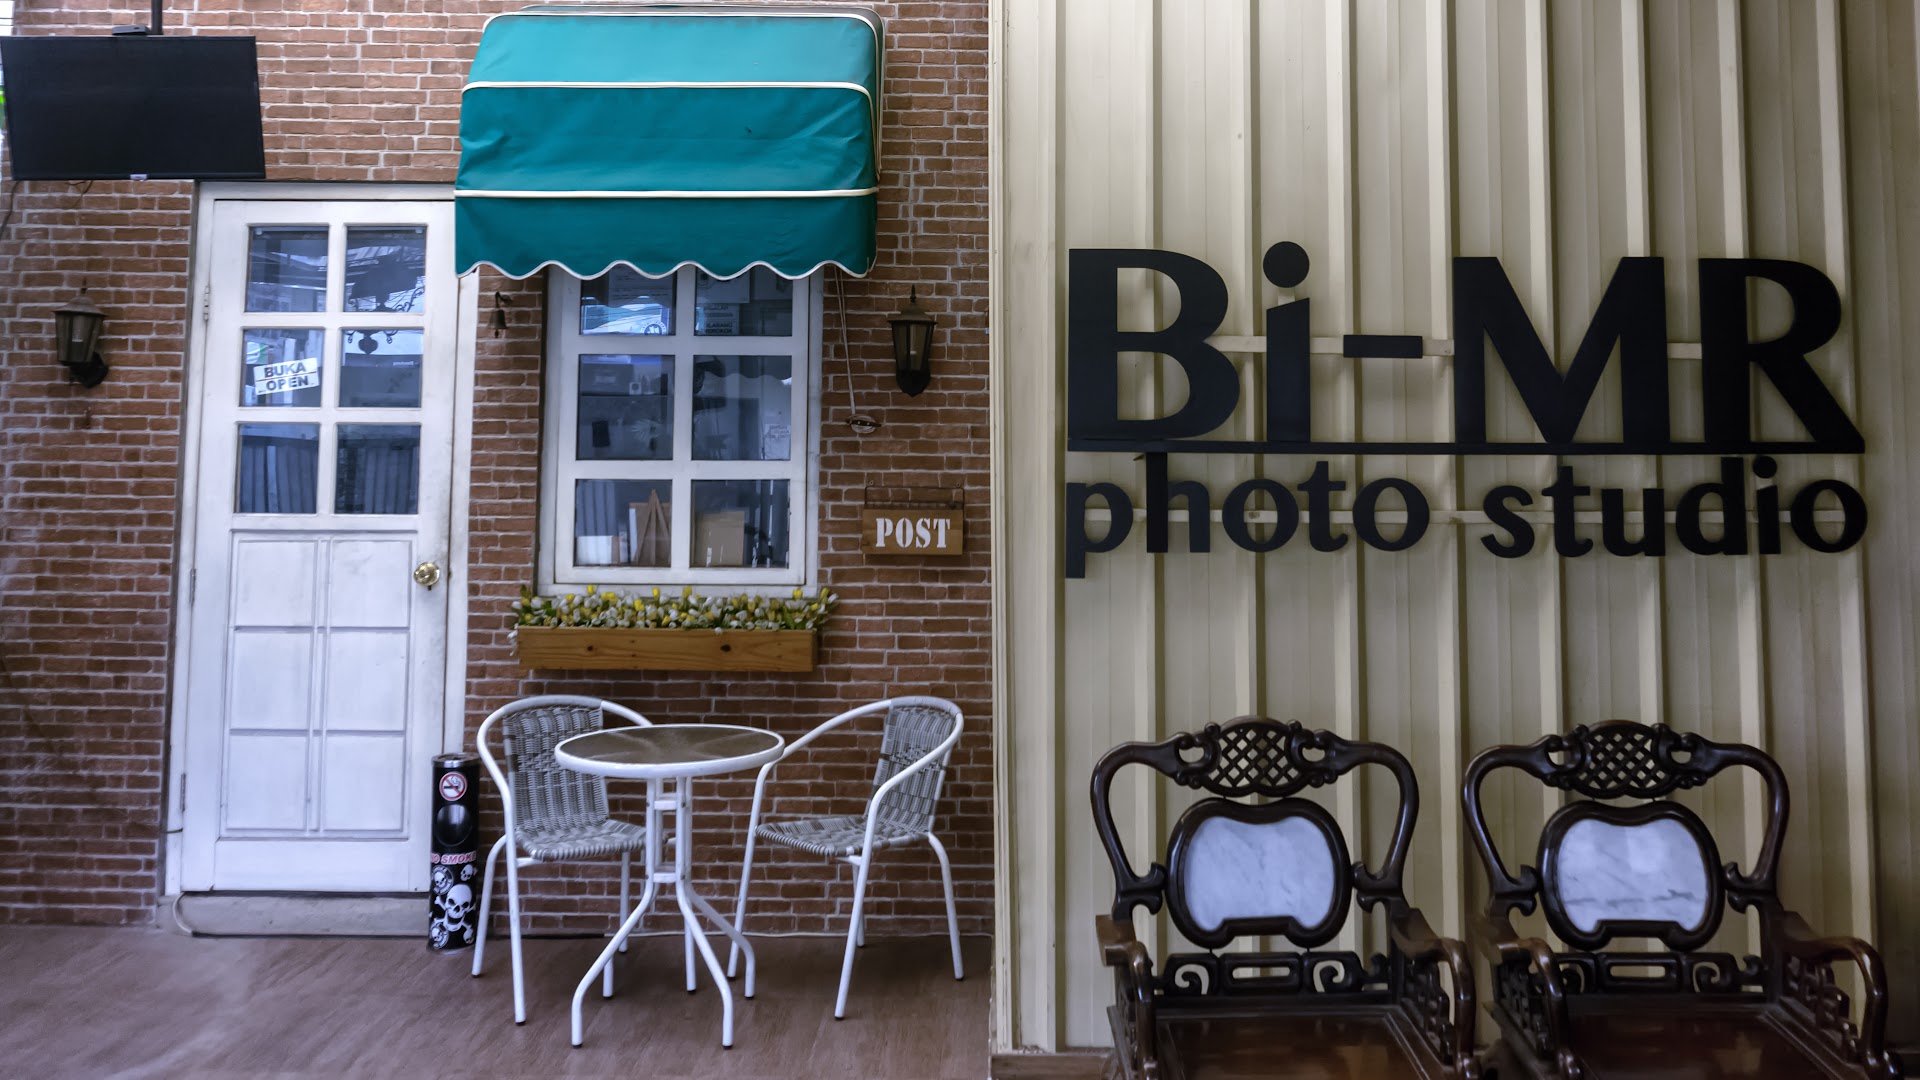 Gambar Bi-mr Photo Studio